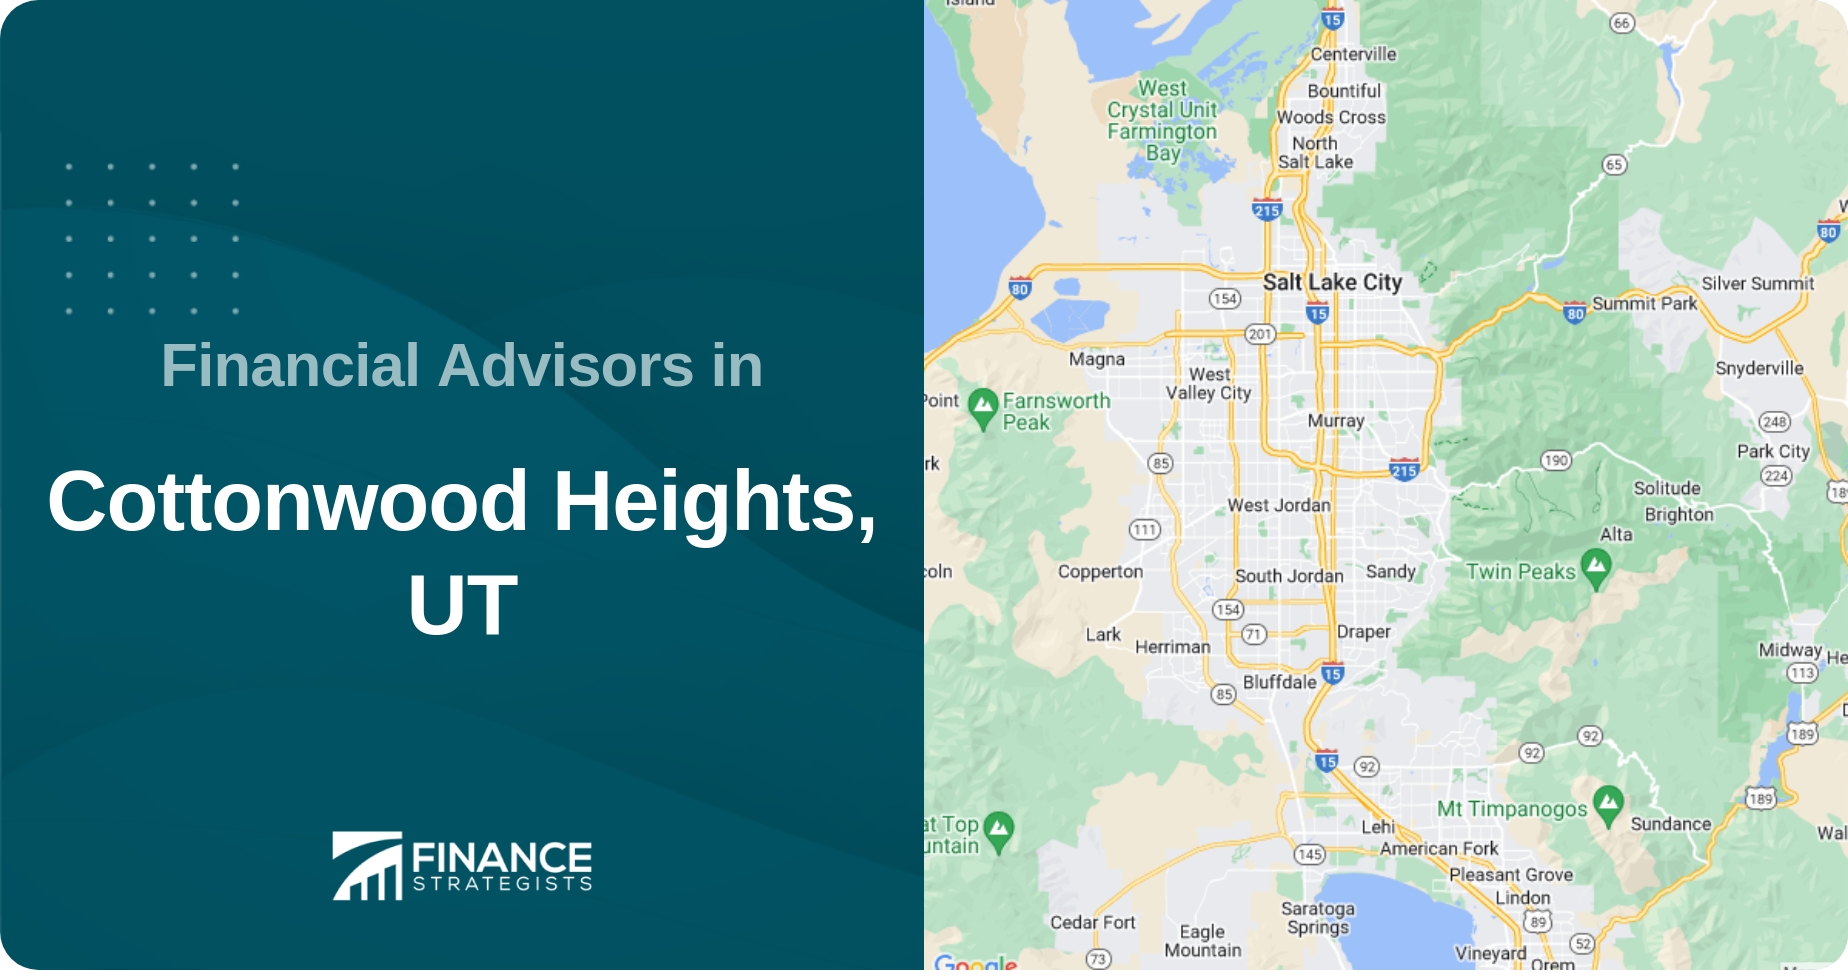 Financial Advisors in Cottonwood Heights, UT